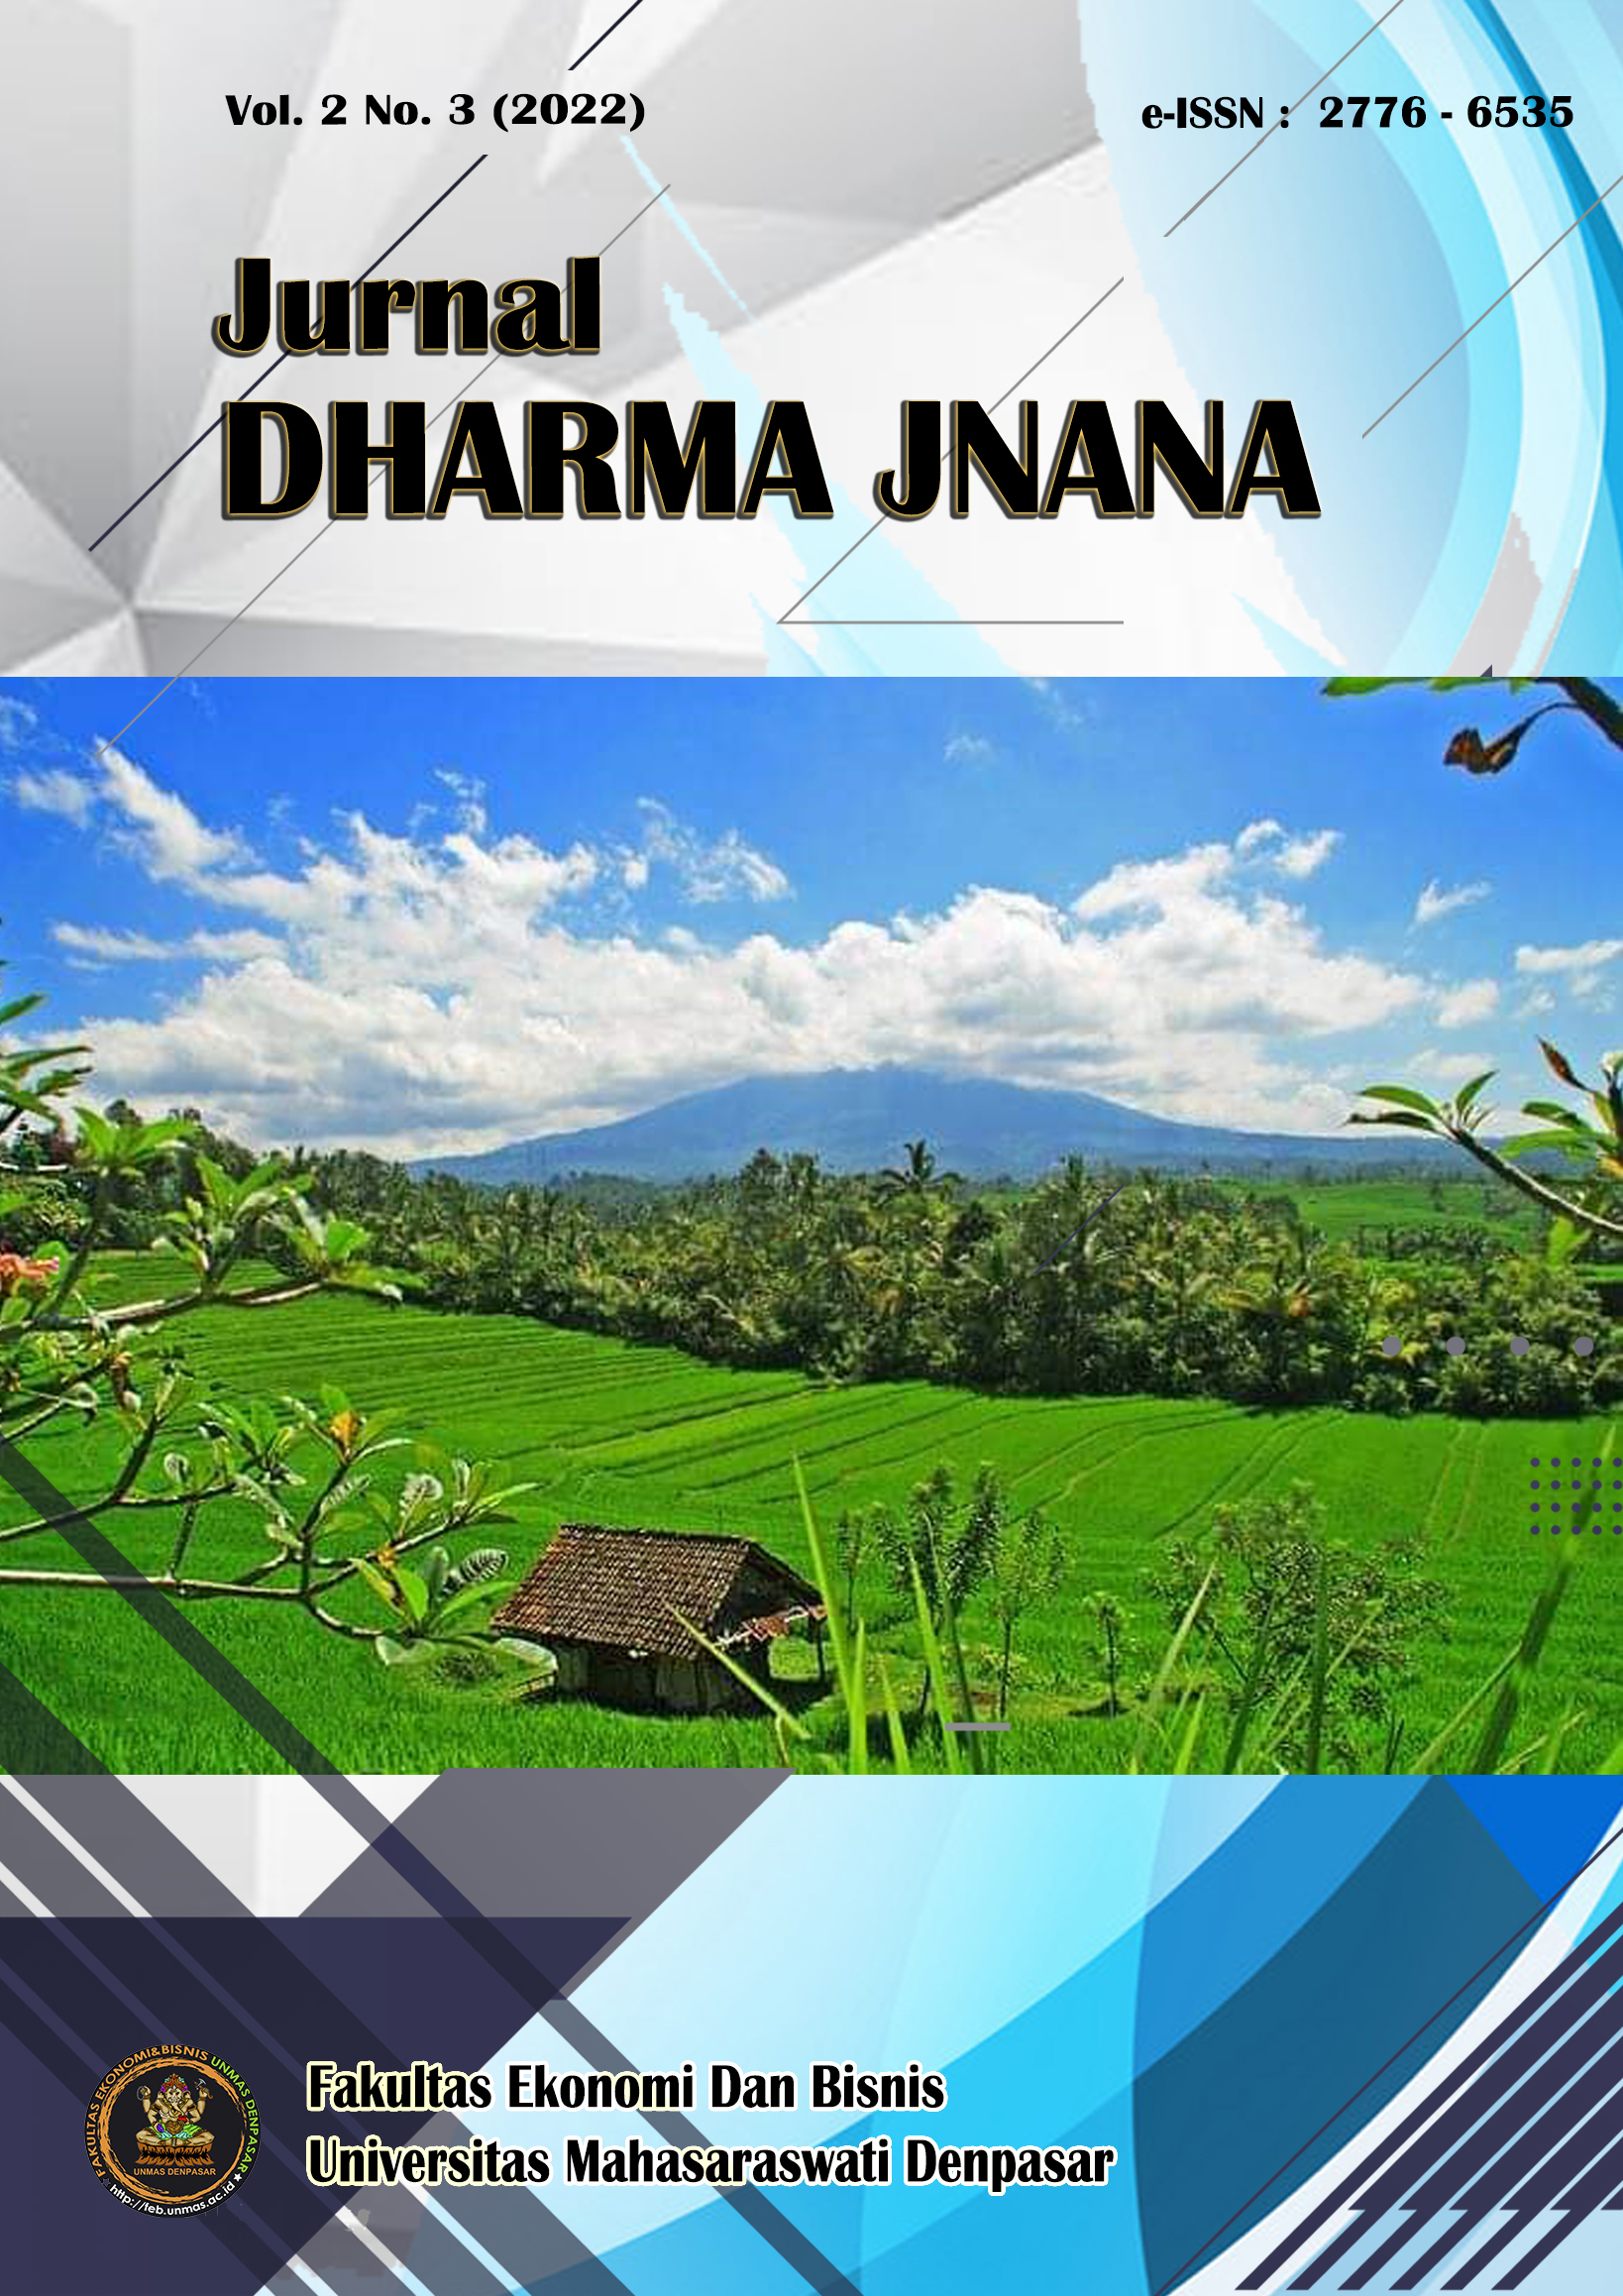 					View Vol. 2 No. 3 (2022): JURNAL DHARMA JNANA
				